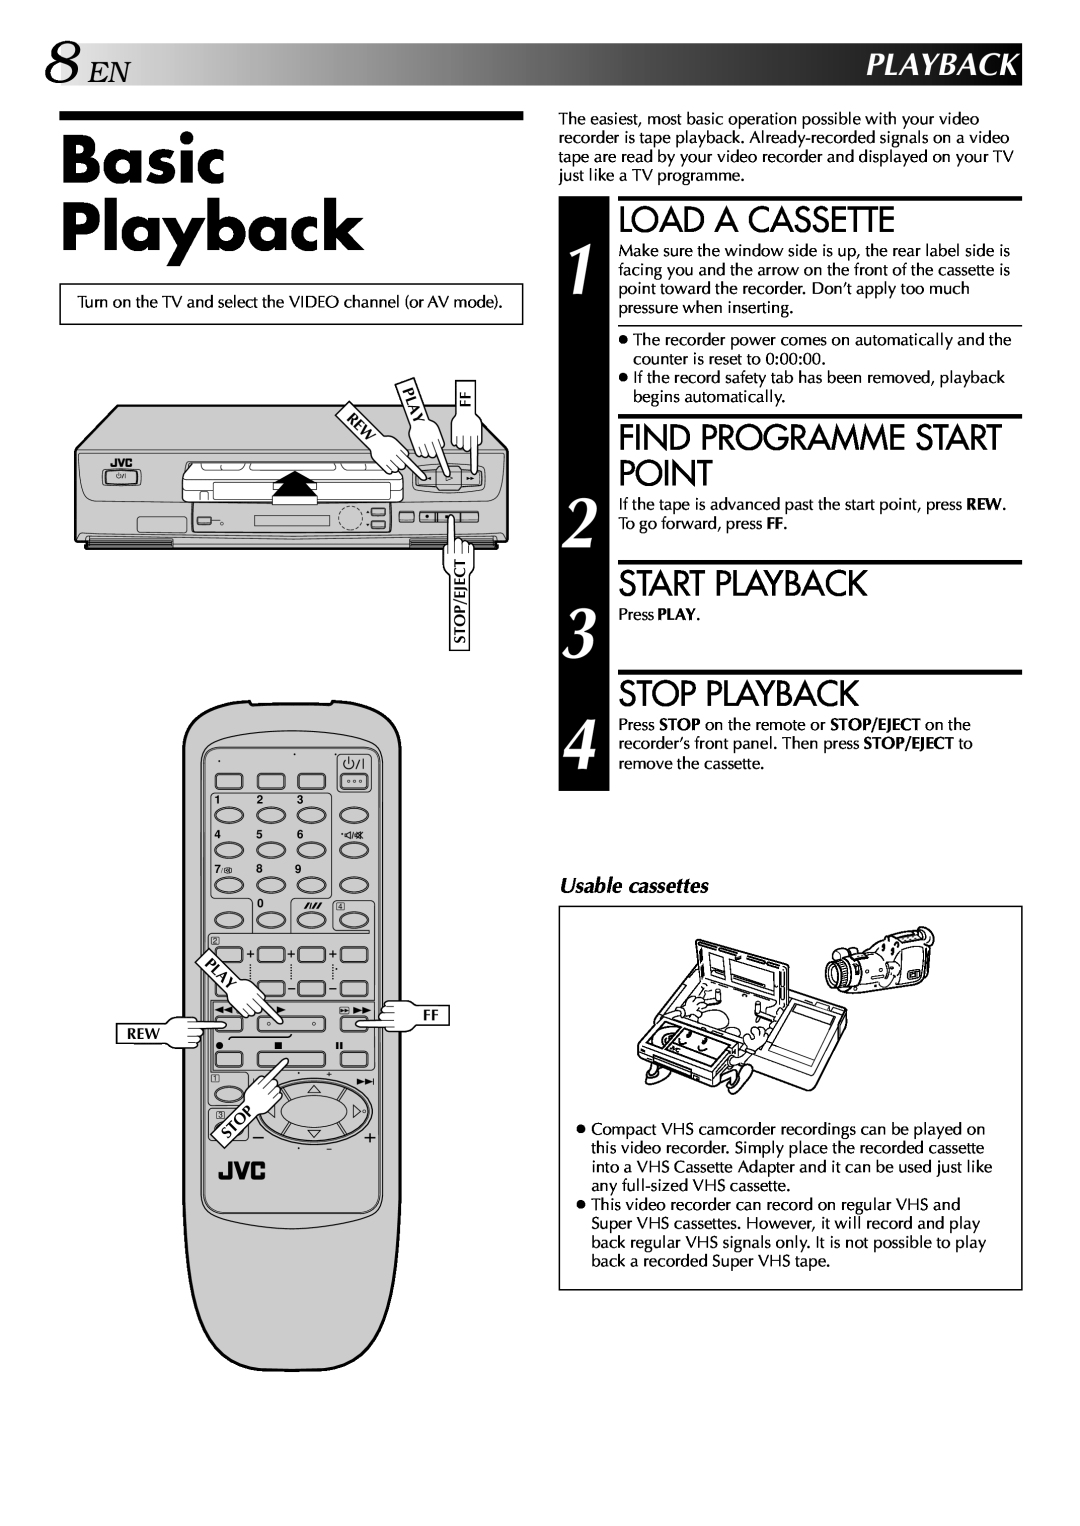 JVC HR-J245EA specifications Basic Playback, Load A Cassette, Point, Start Playback, Stop Playback, Find Programme Start 